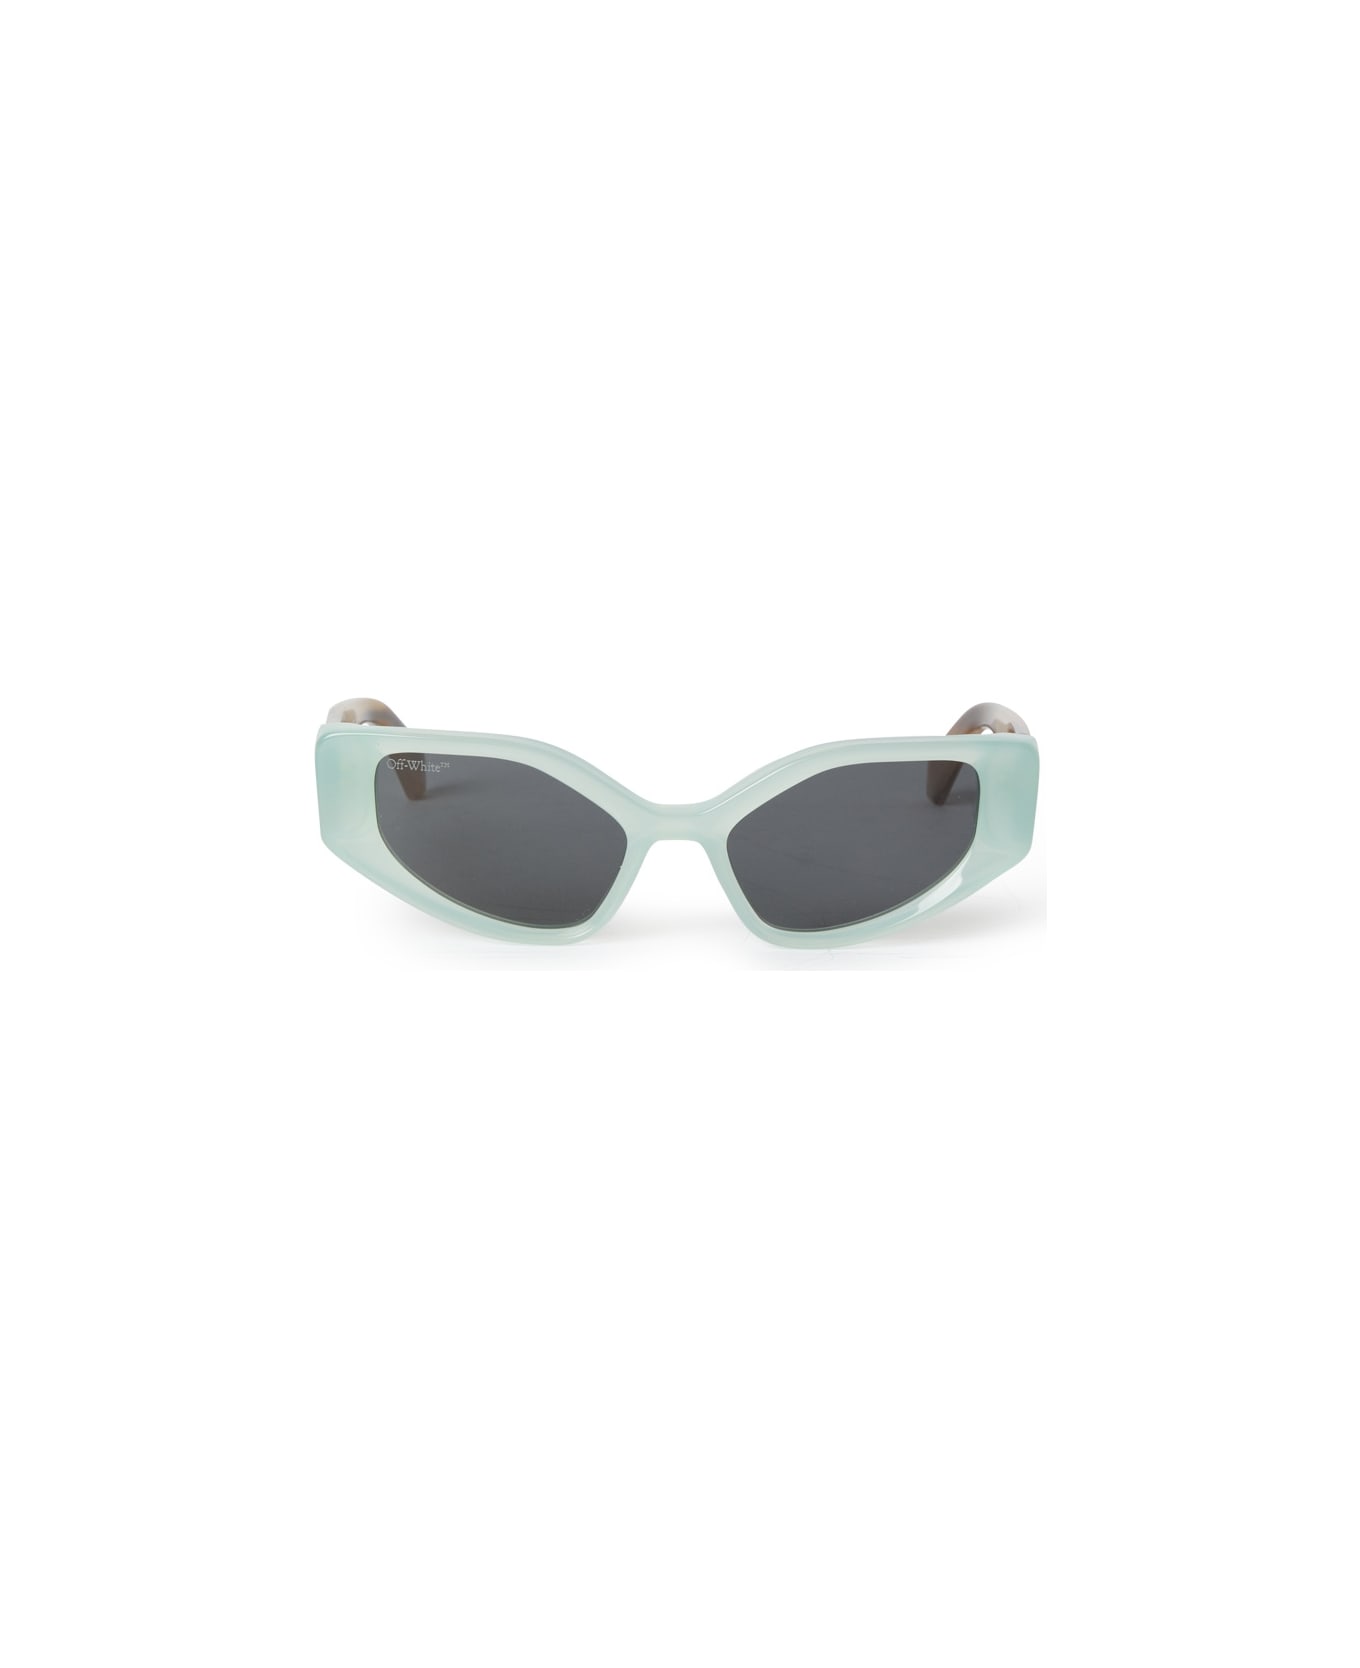 Off-White MEMPHIS SUNGLASSES Sunglasses - Teal